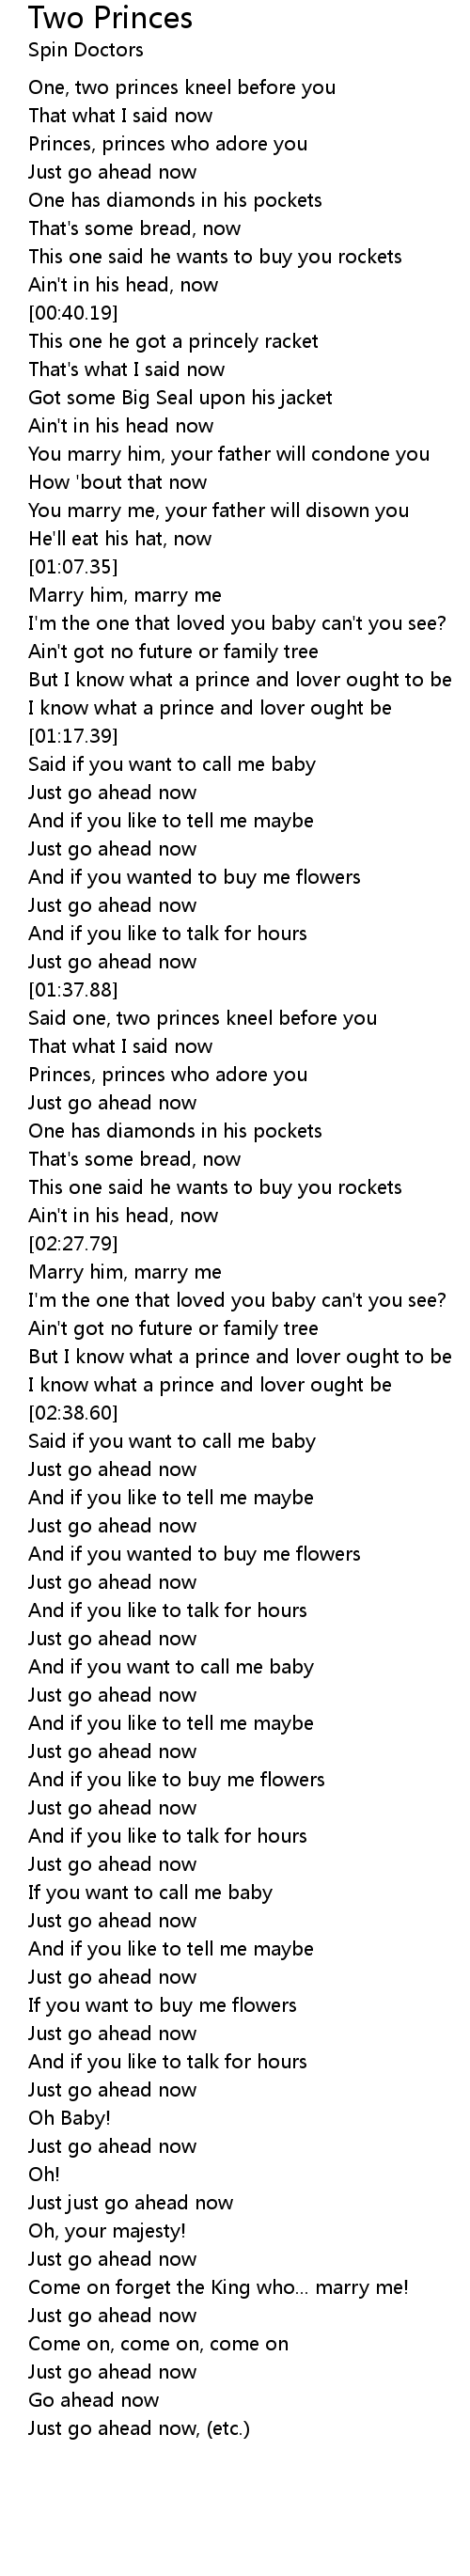 If you want to call me baby just go ahead Two Princes Lyrics Follow Lyrics